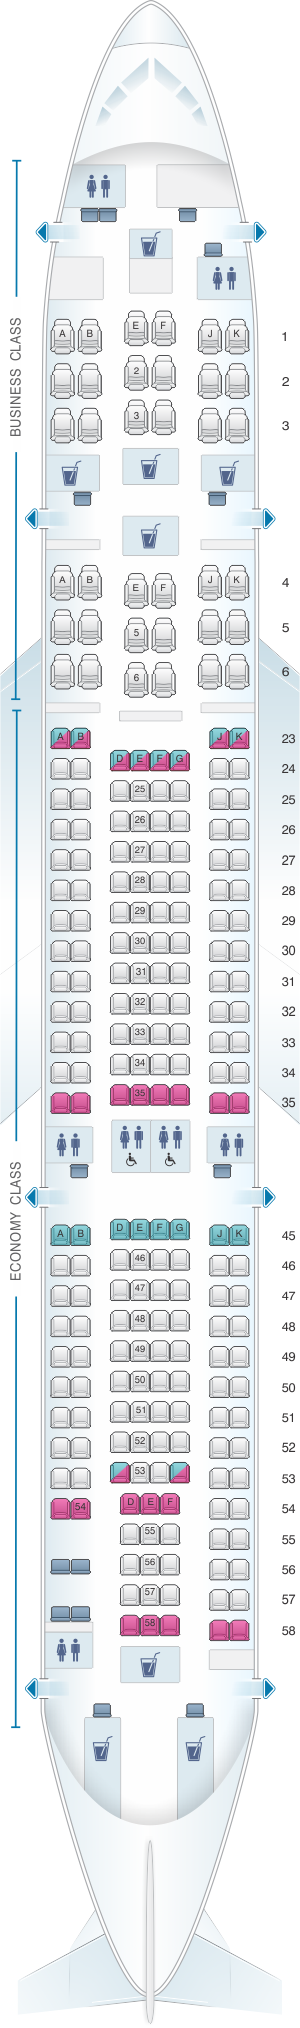 Seat Map Qantas Airways Airbus A330 200 International 235pax Seatmaestro